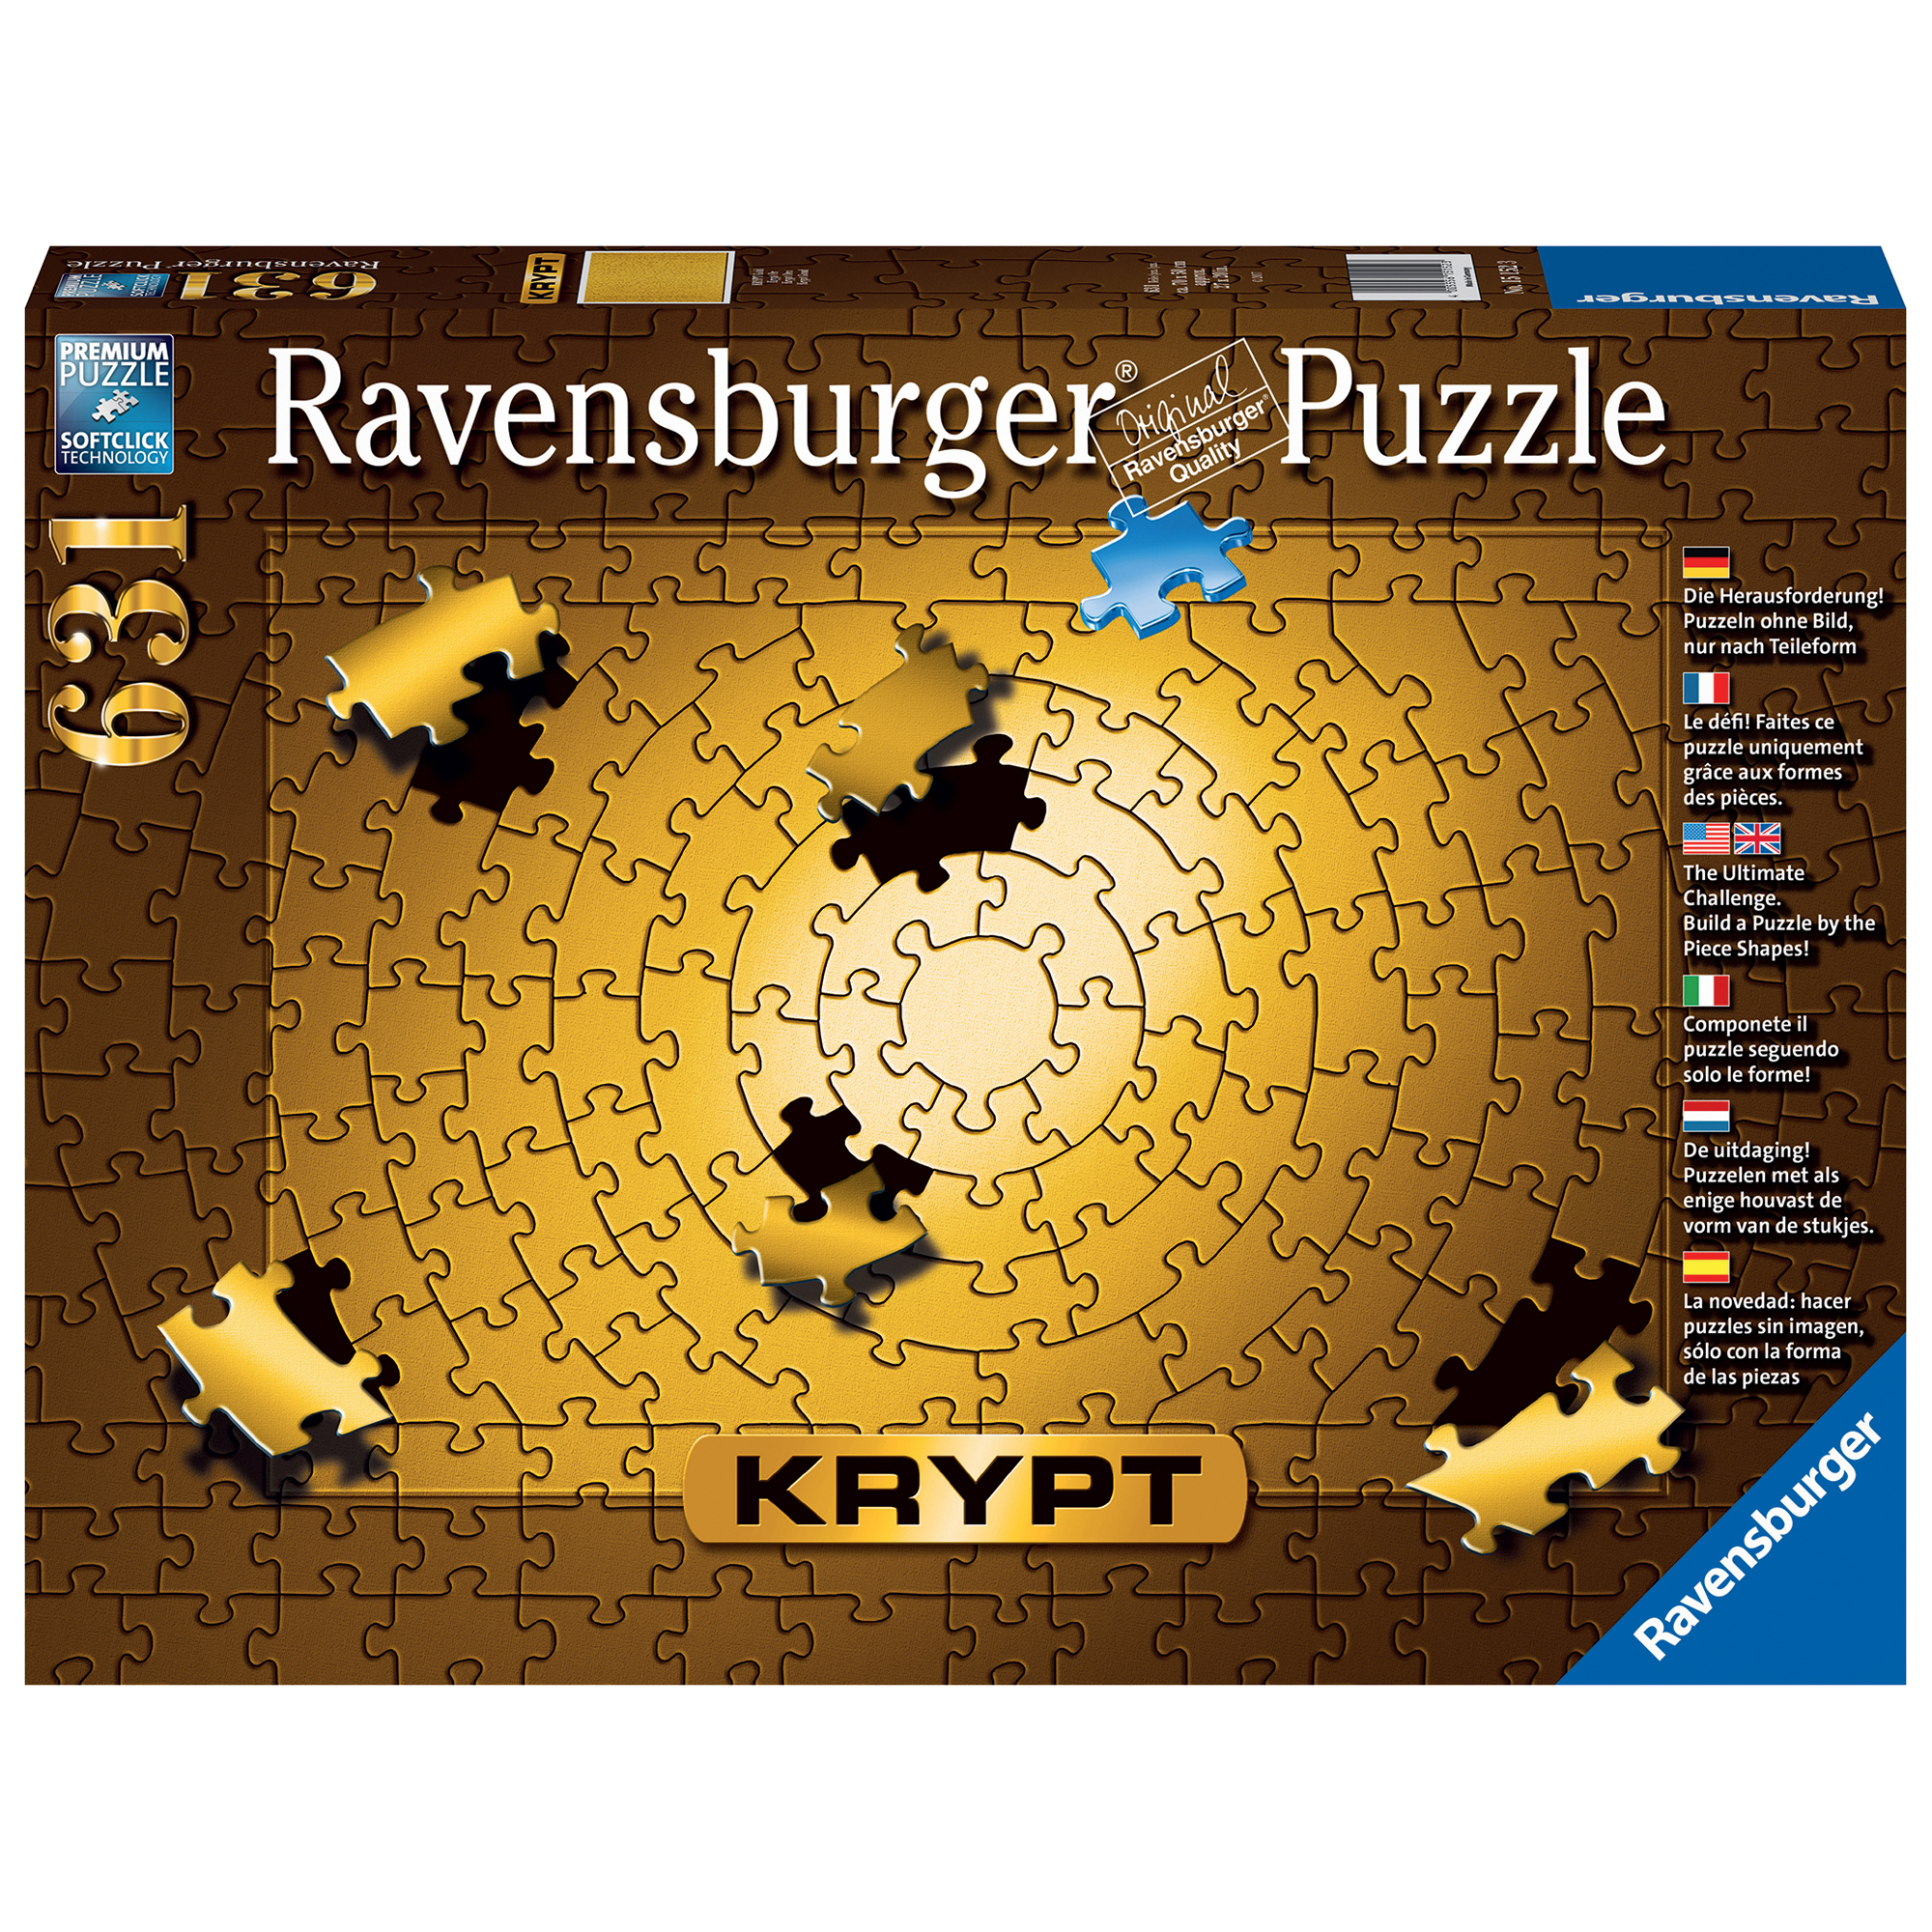 Ravensburger krypt gold, 631 pezzi - Ravensburger